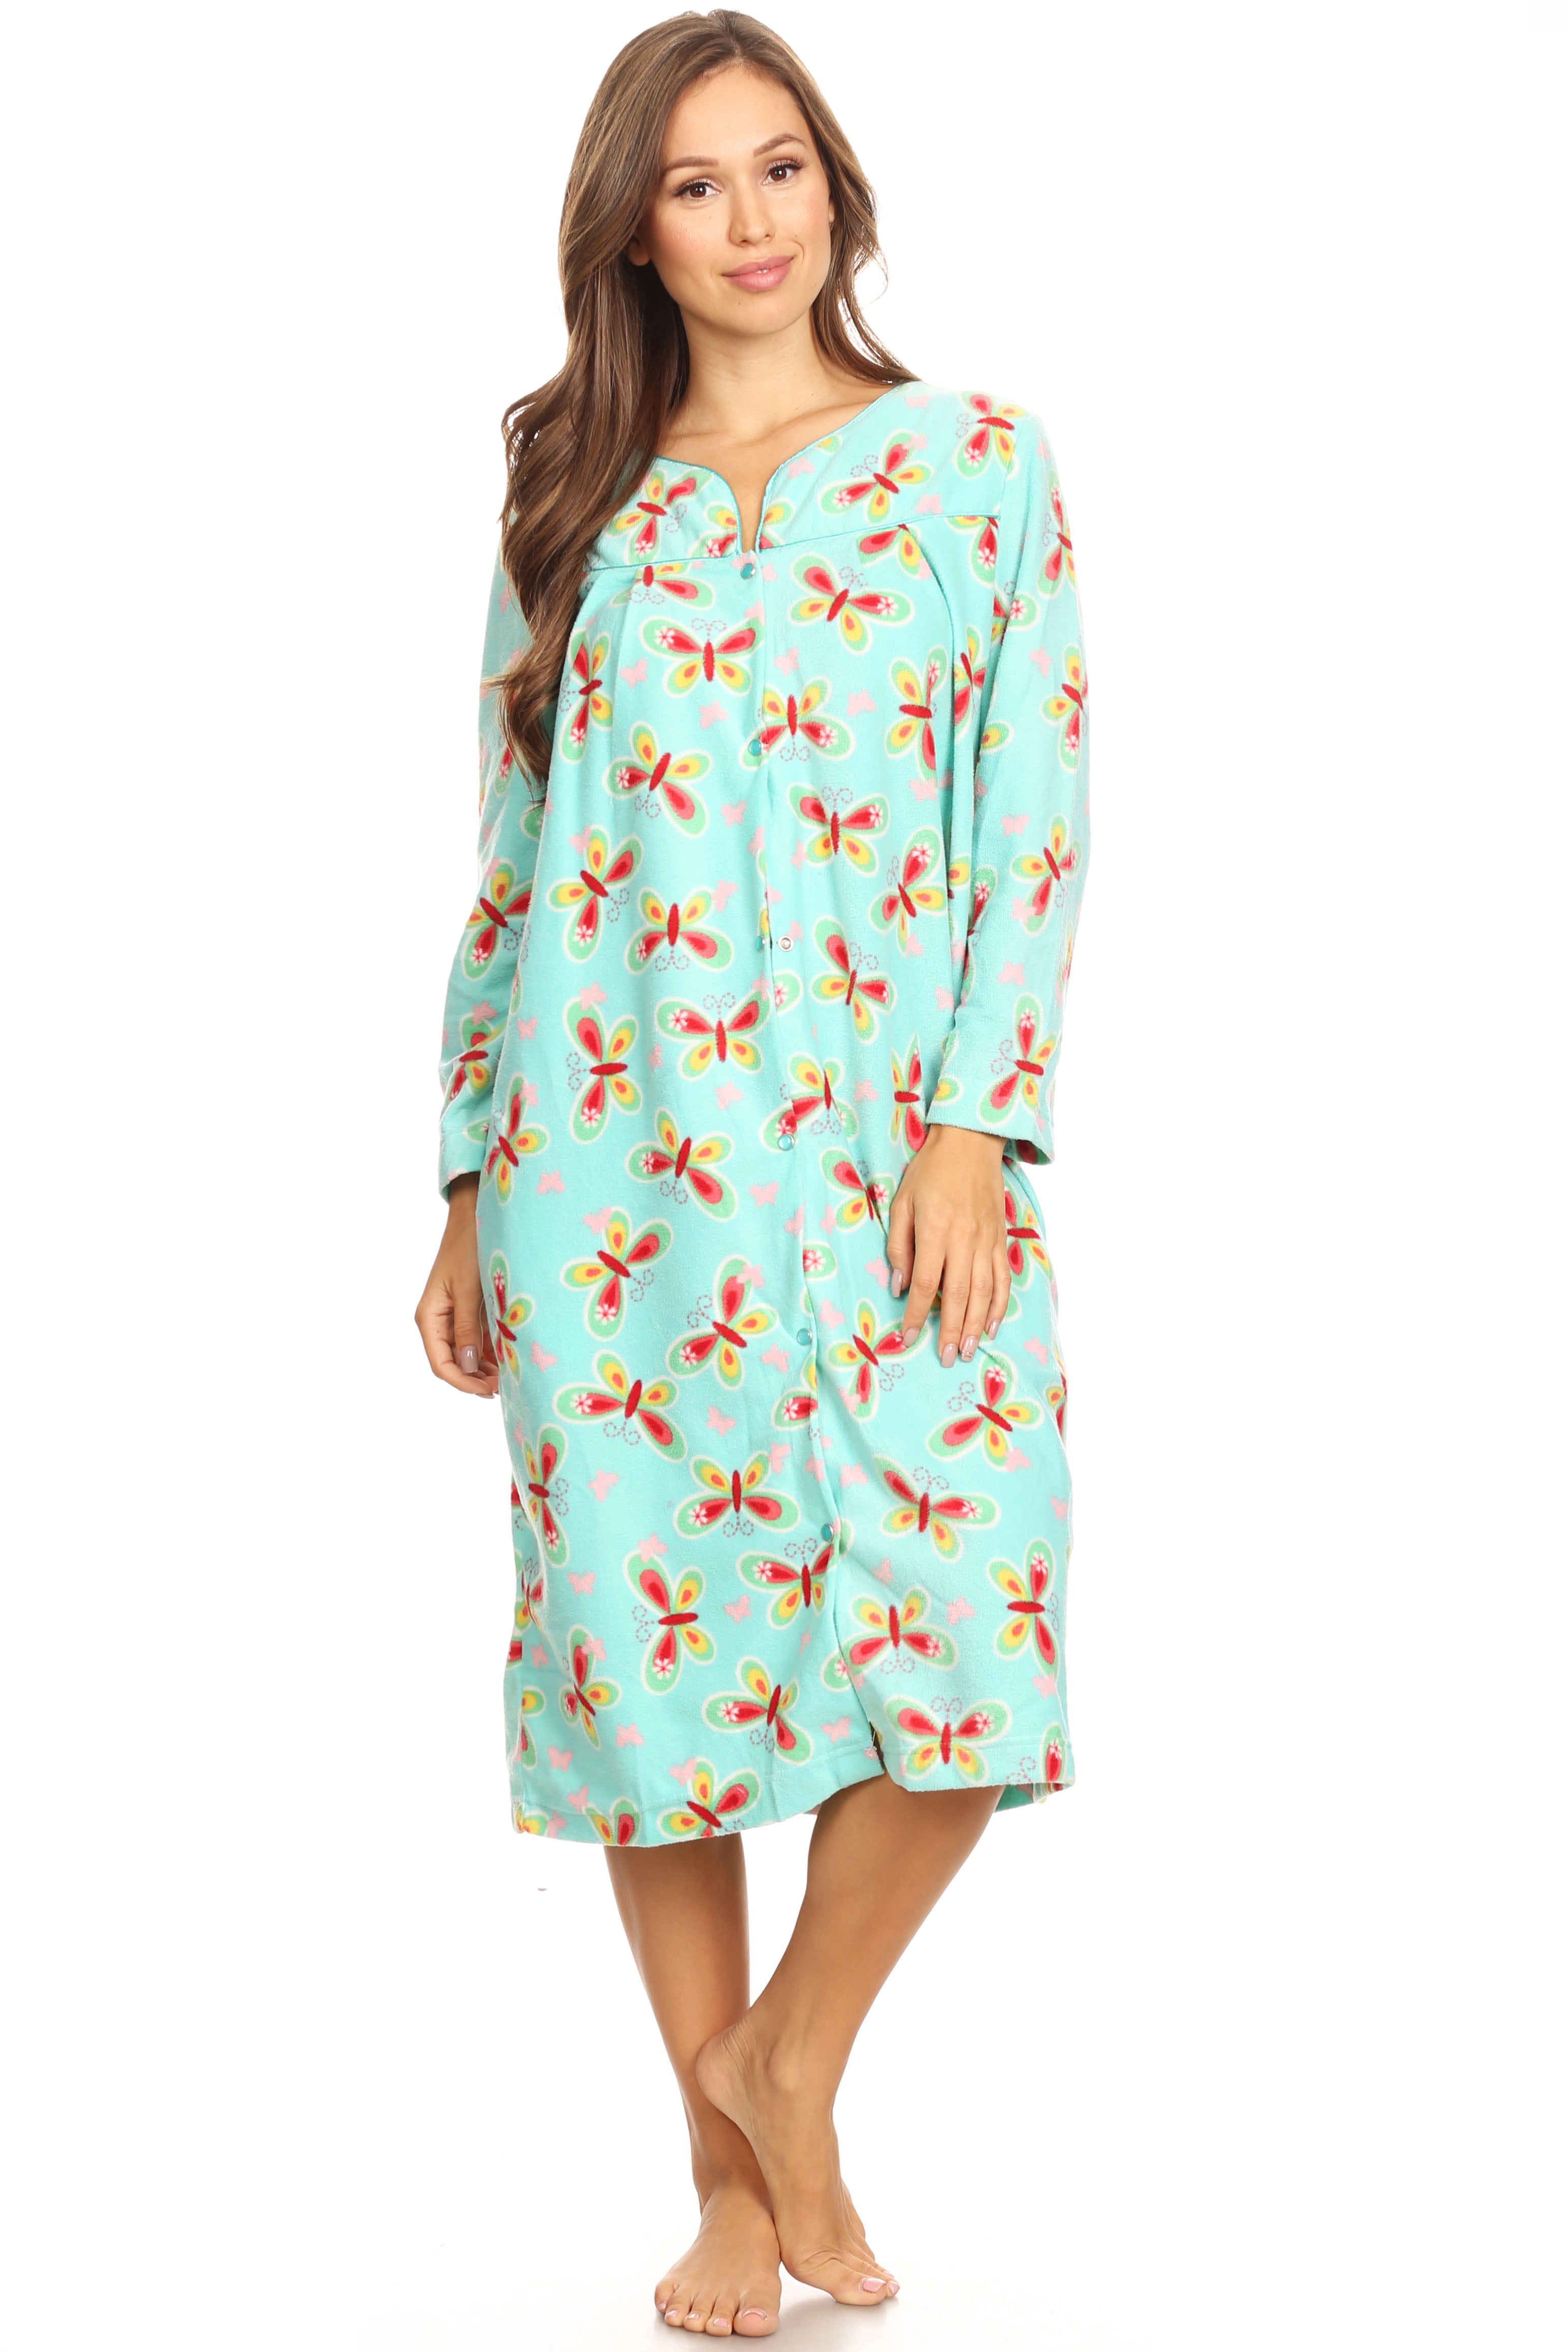 Patricia Lingerie Womens Long Housedress Shortsleeve Ultra Soft Cotton Nightgown Pyjama